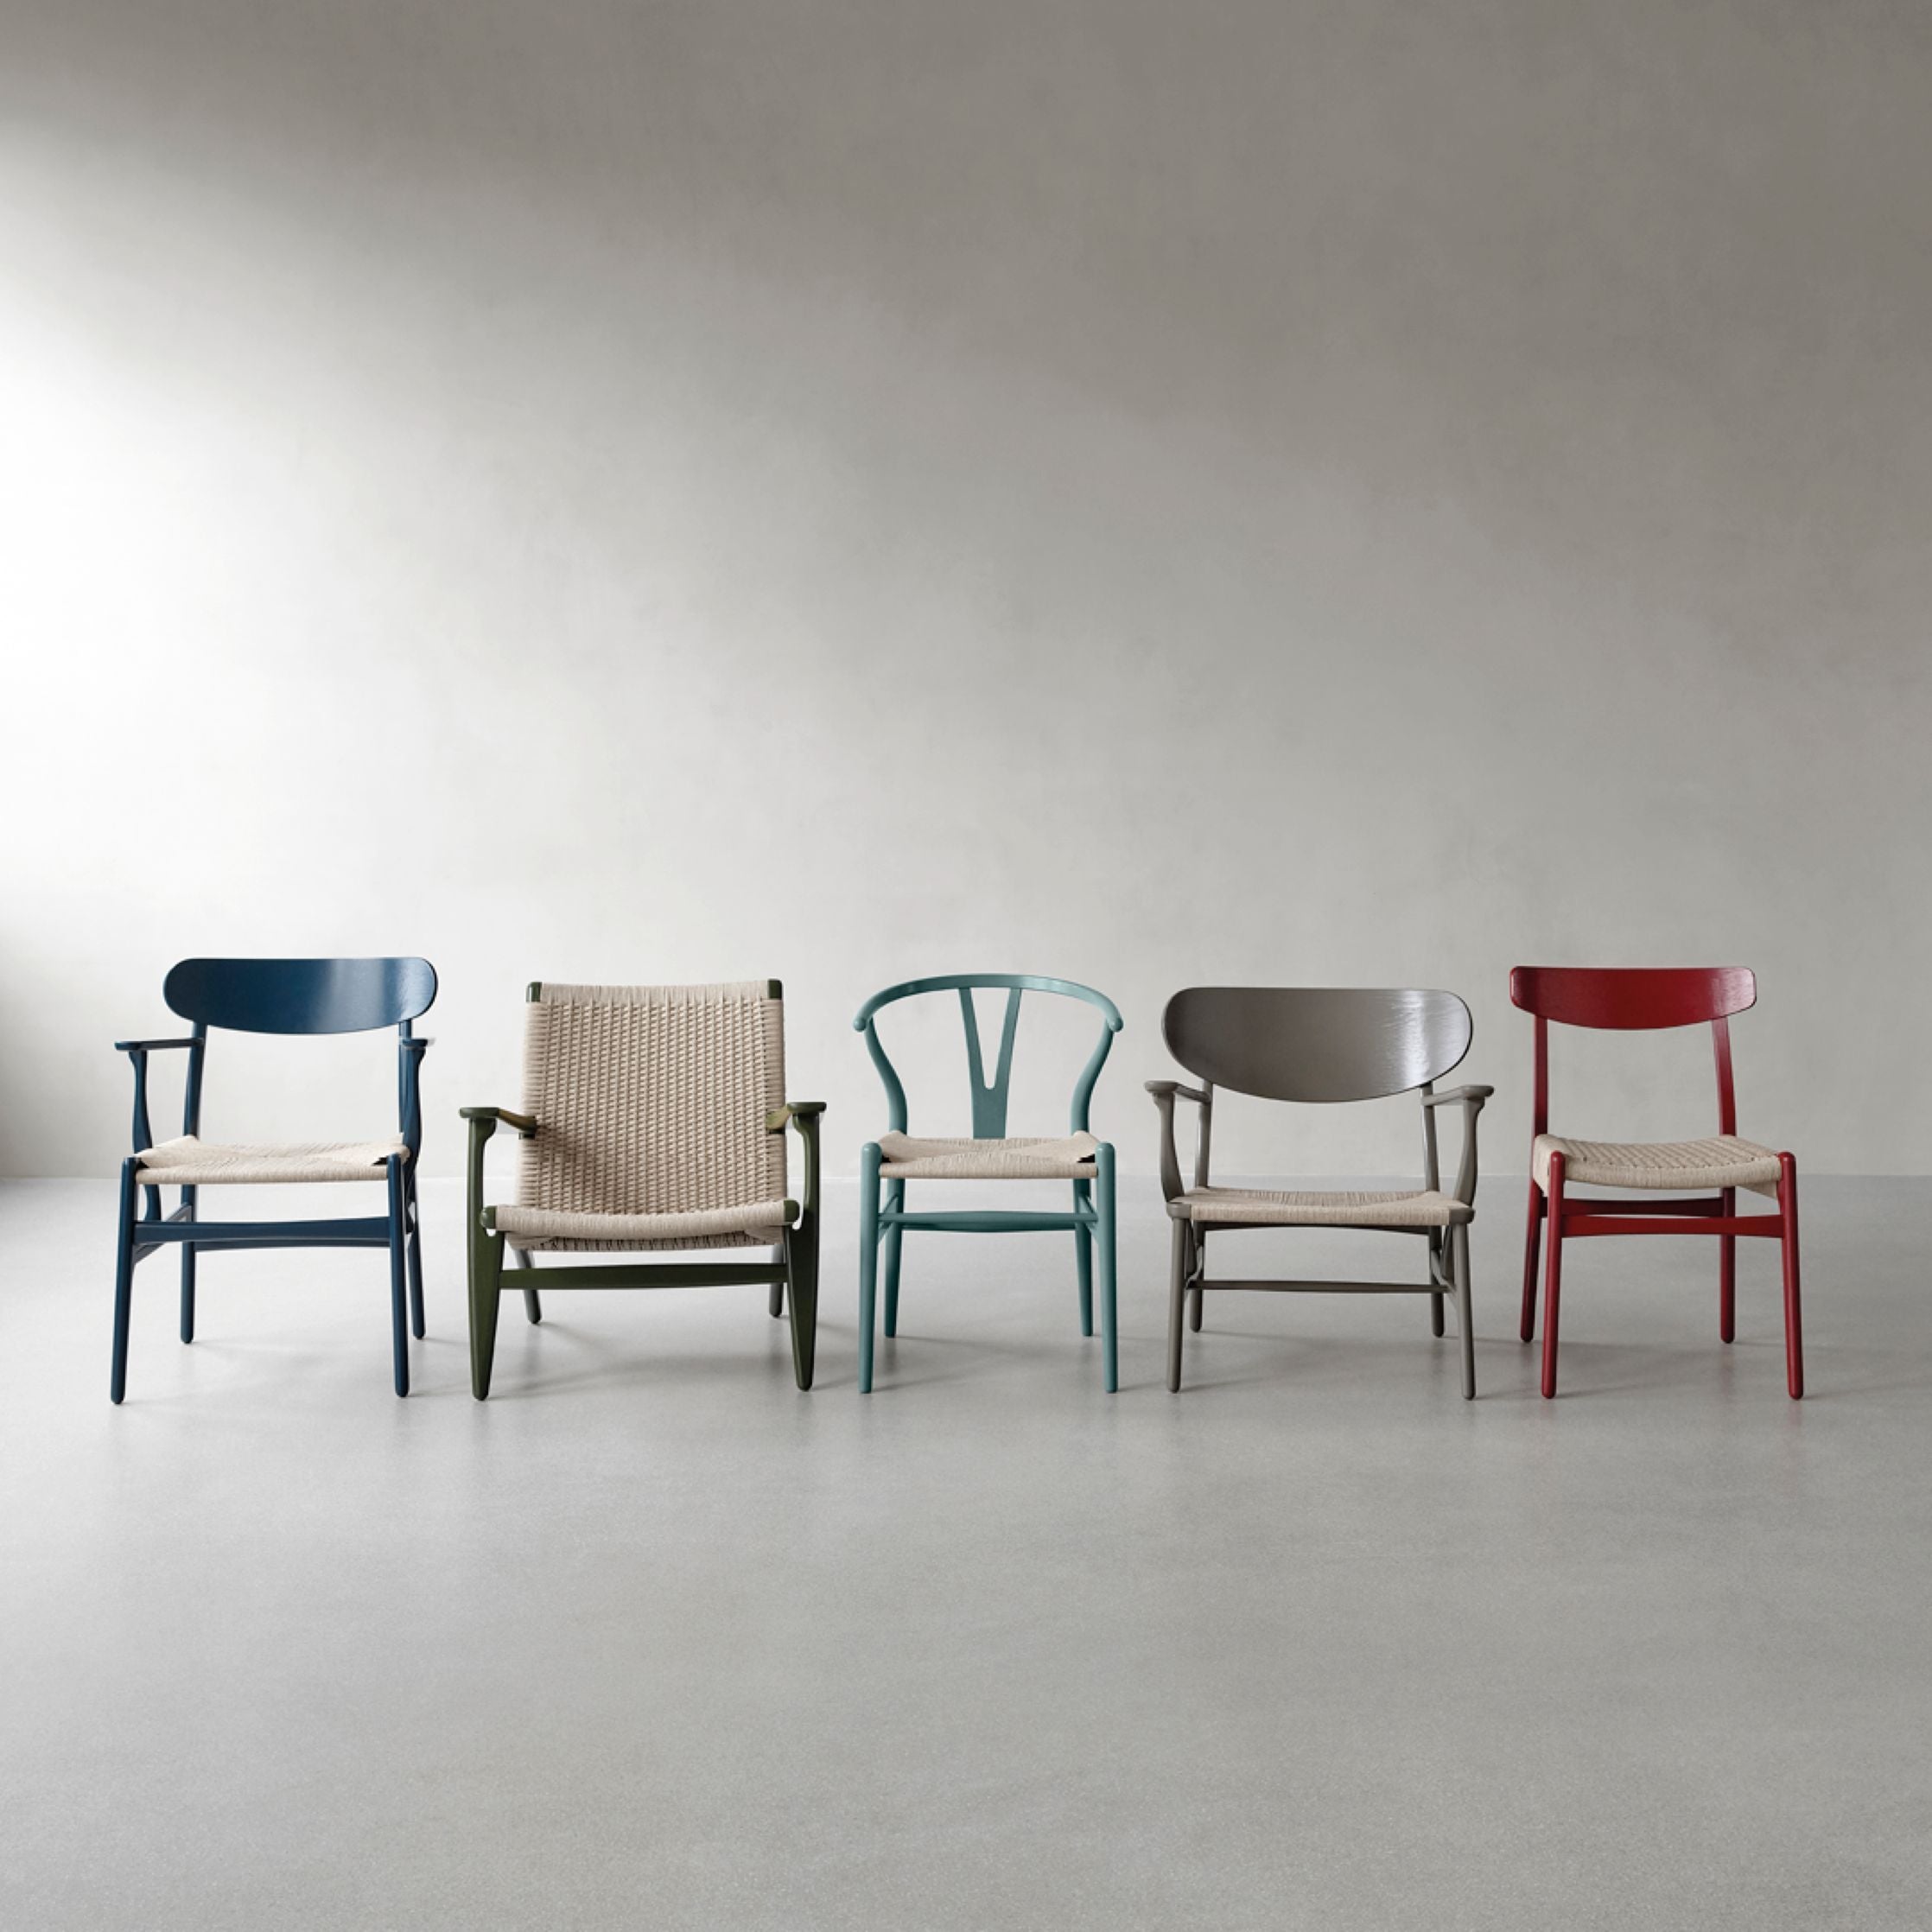 Carl Hansen CH25 Lounge chaise chaise, étain bleu / naturel tissé